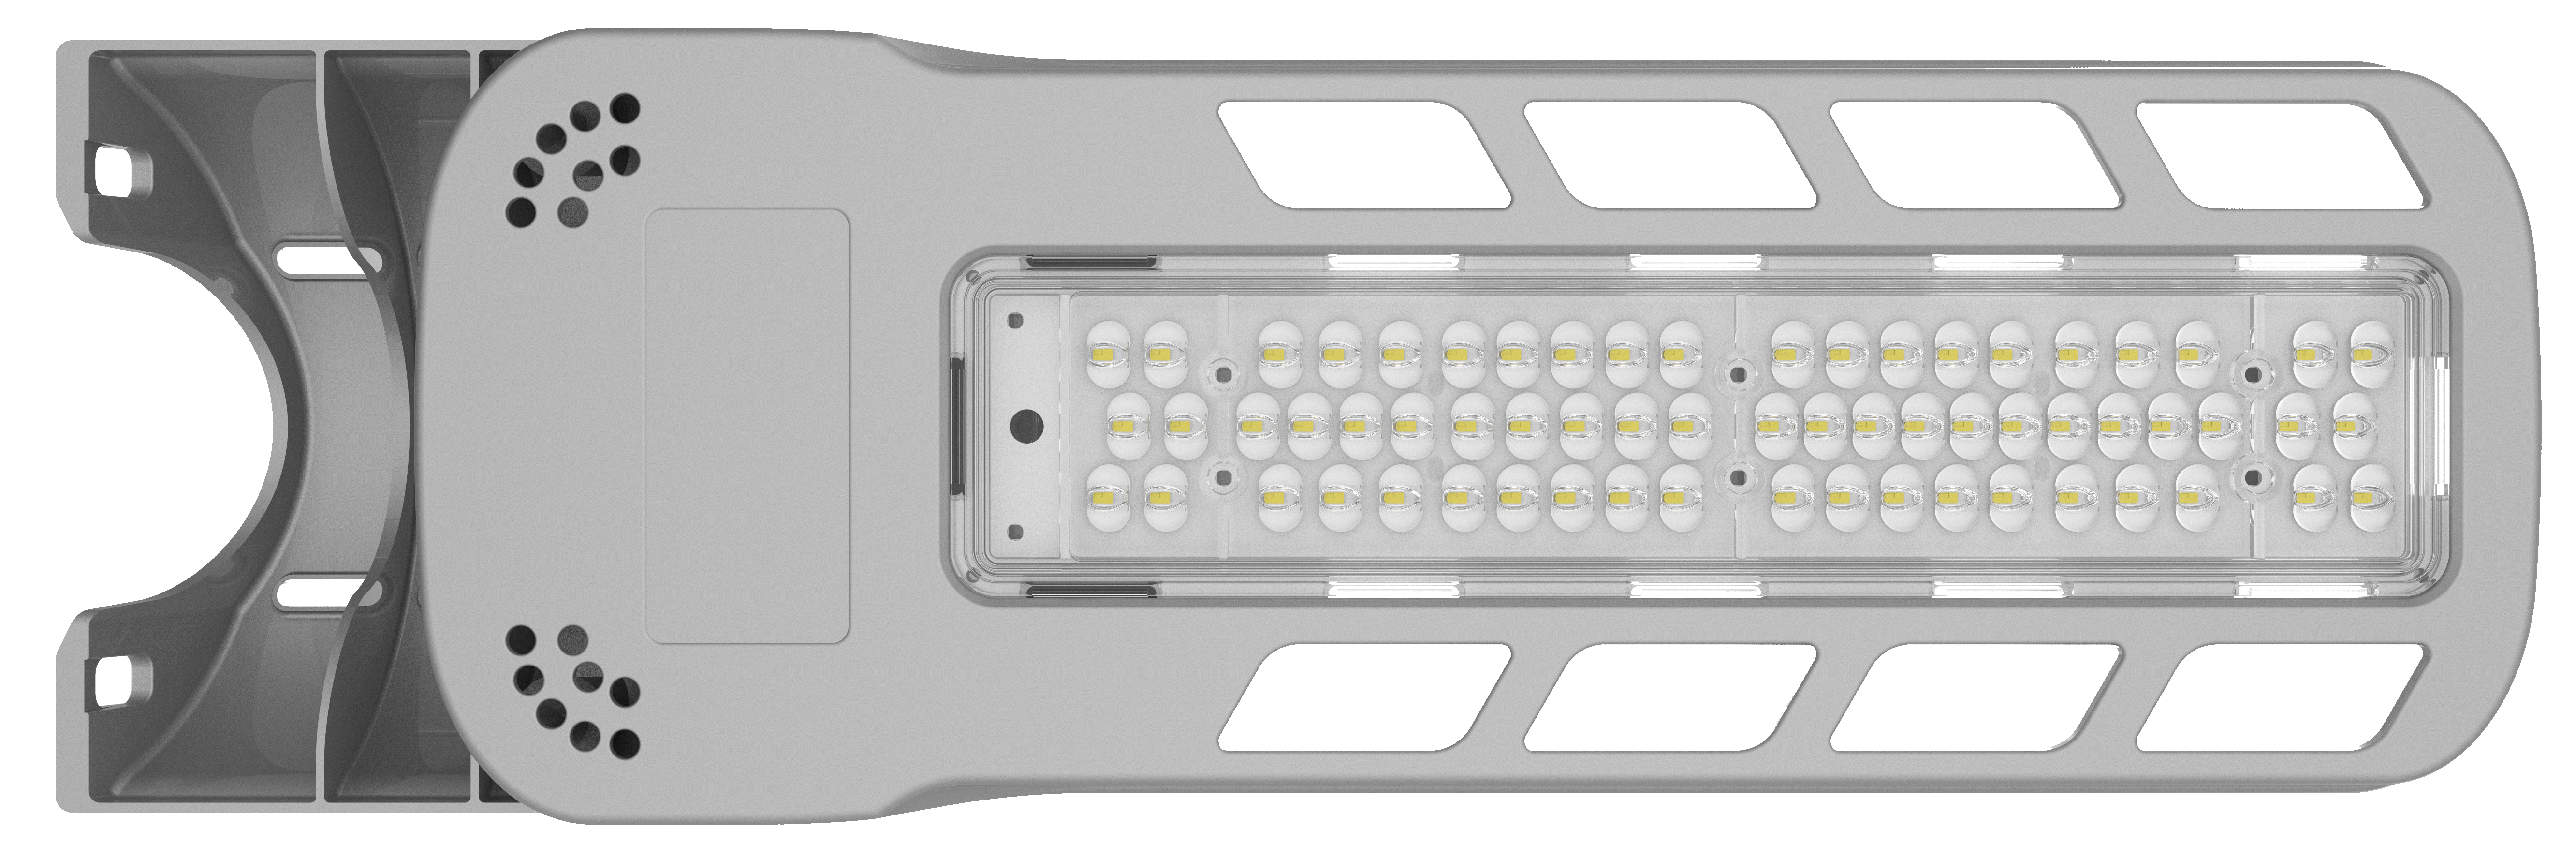 Übersee-LED-Straßenlaterne der RK-Serie 